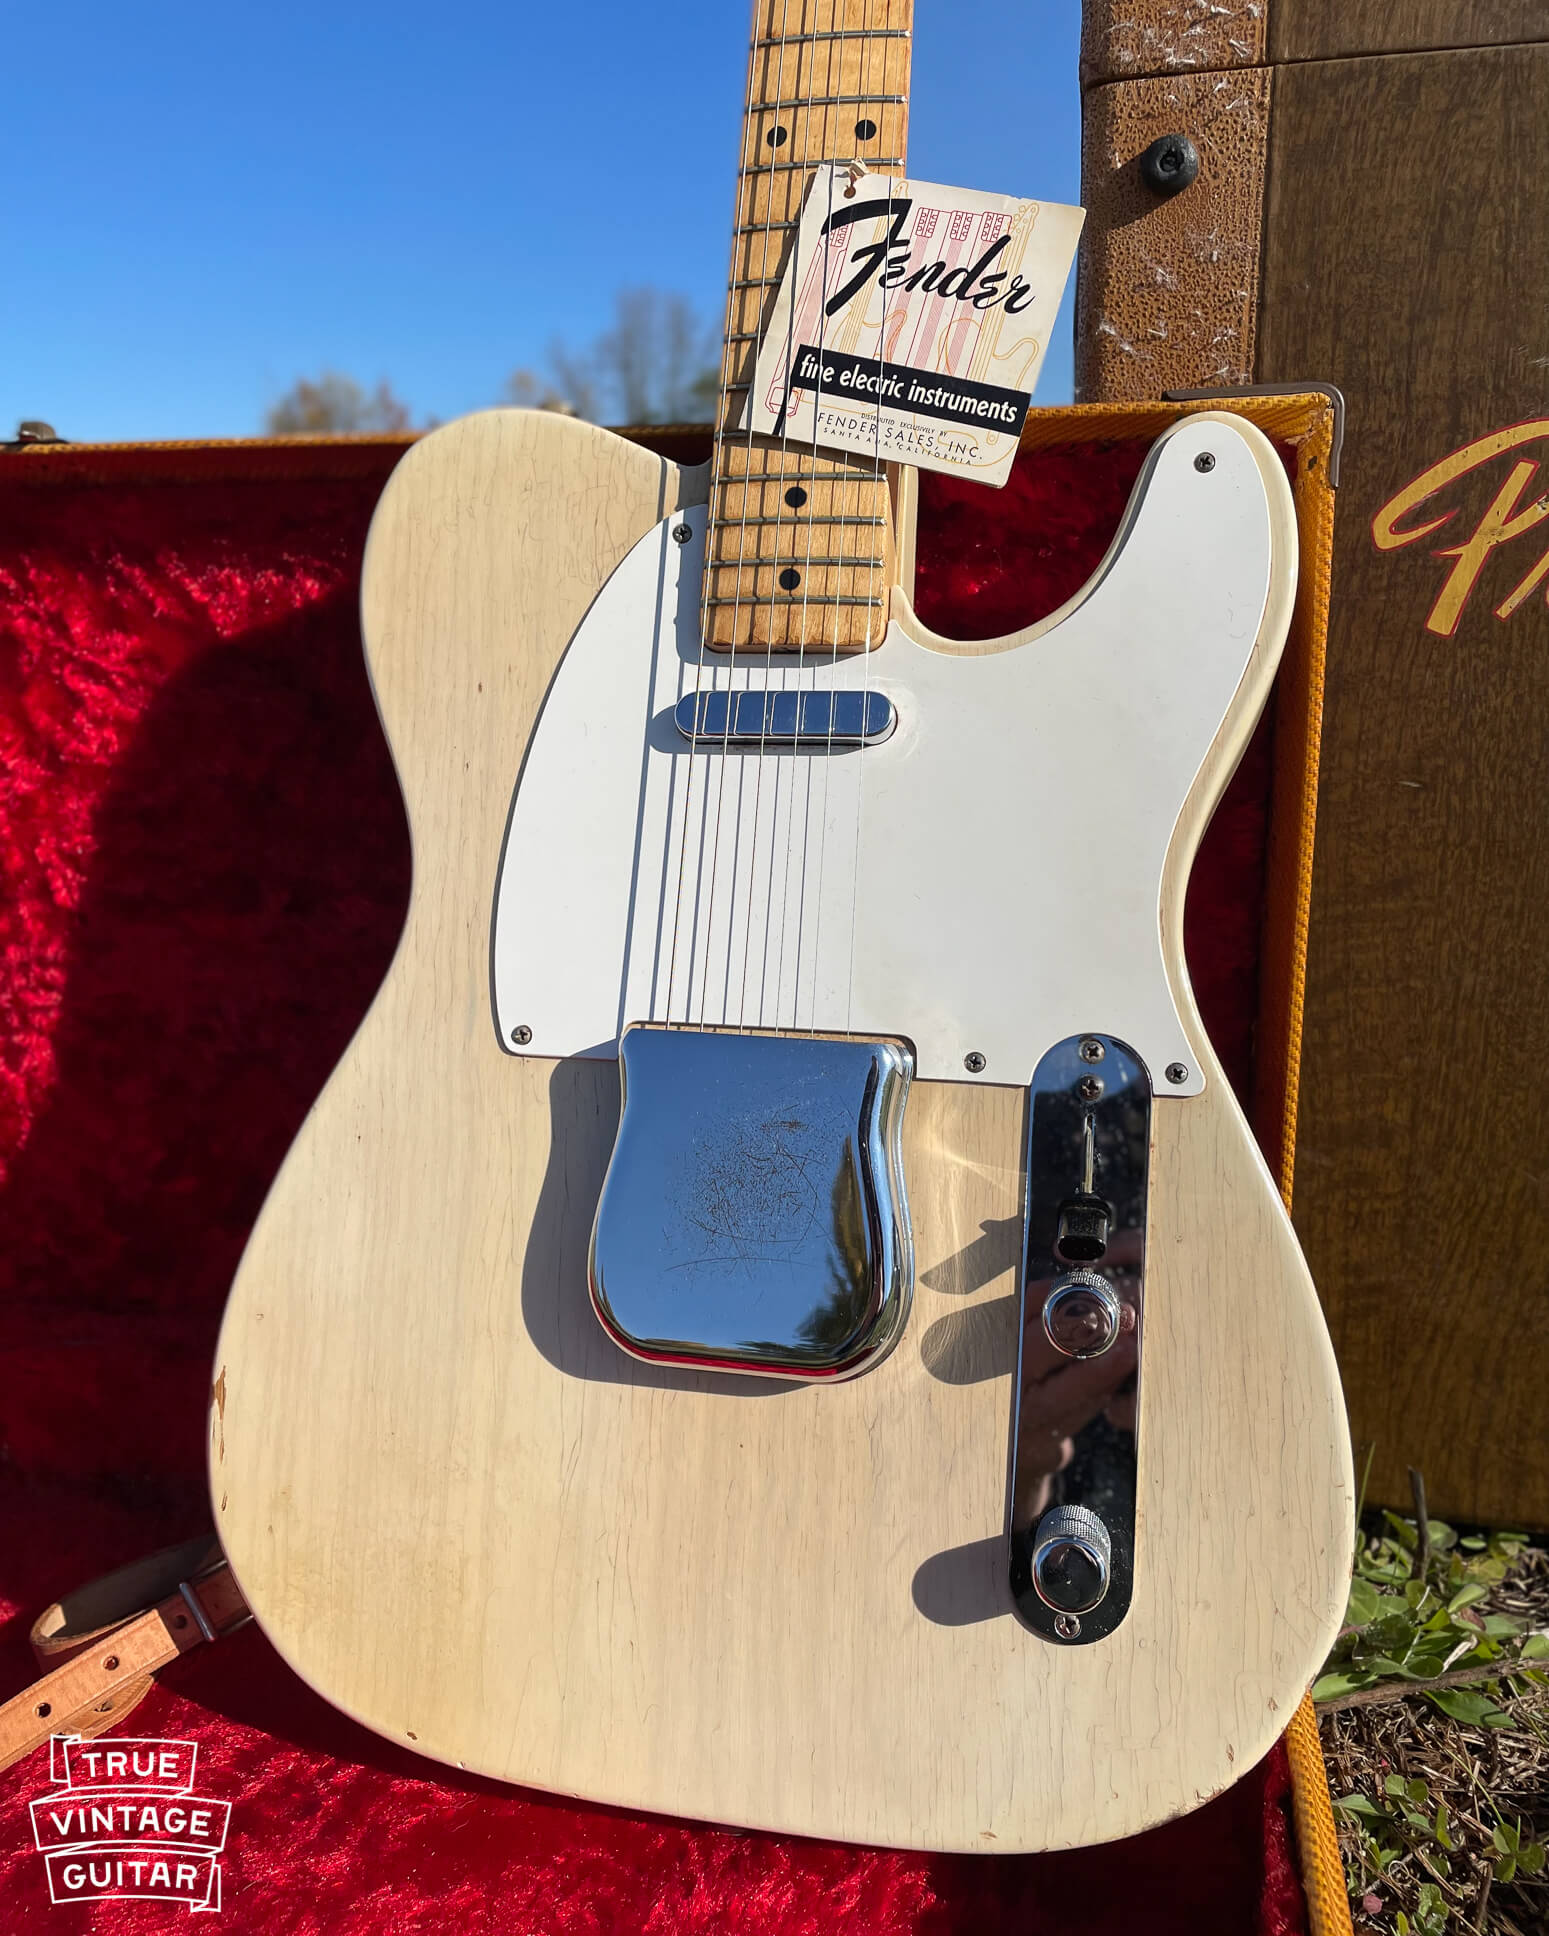 Sell my 1950s Fender Telecaster guitar